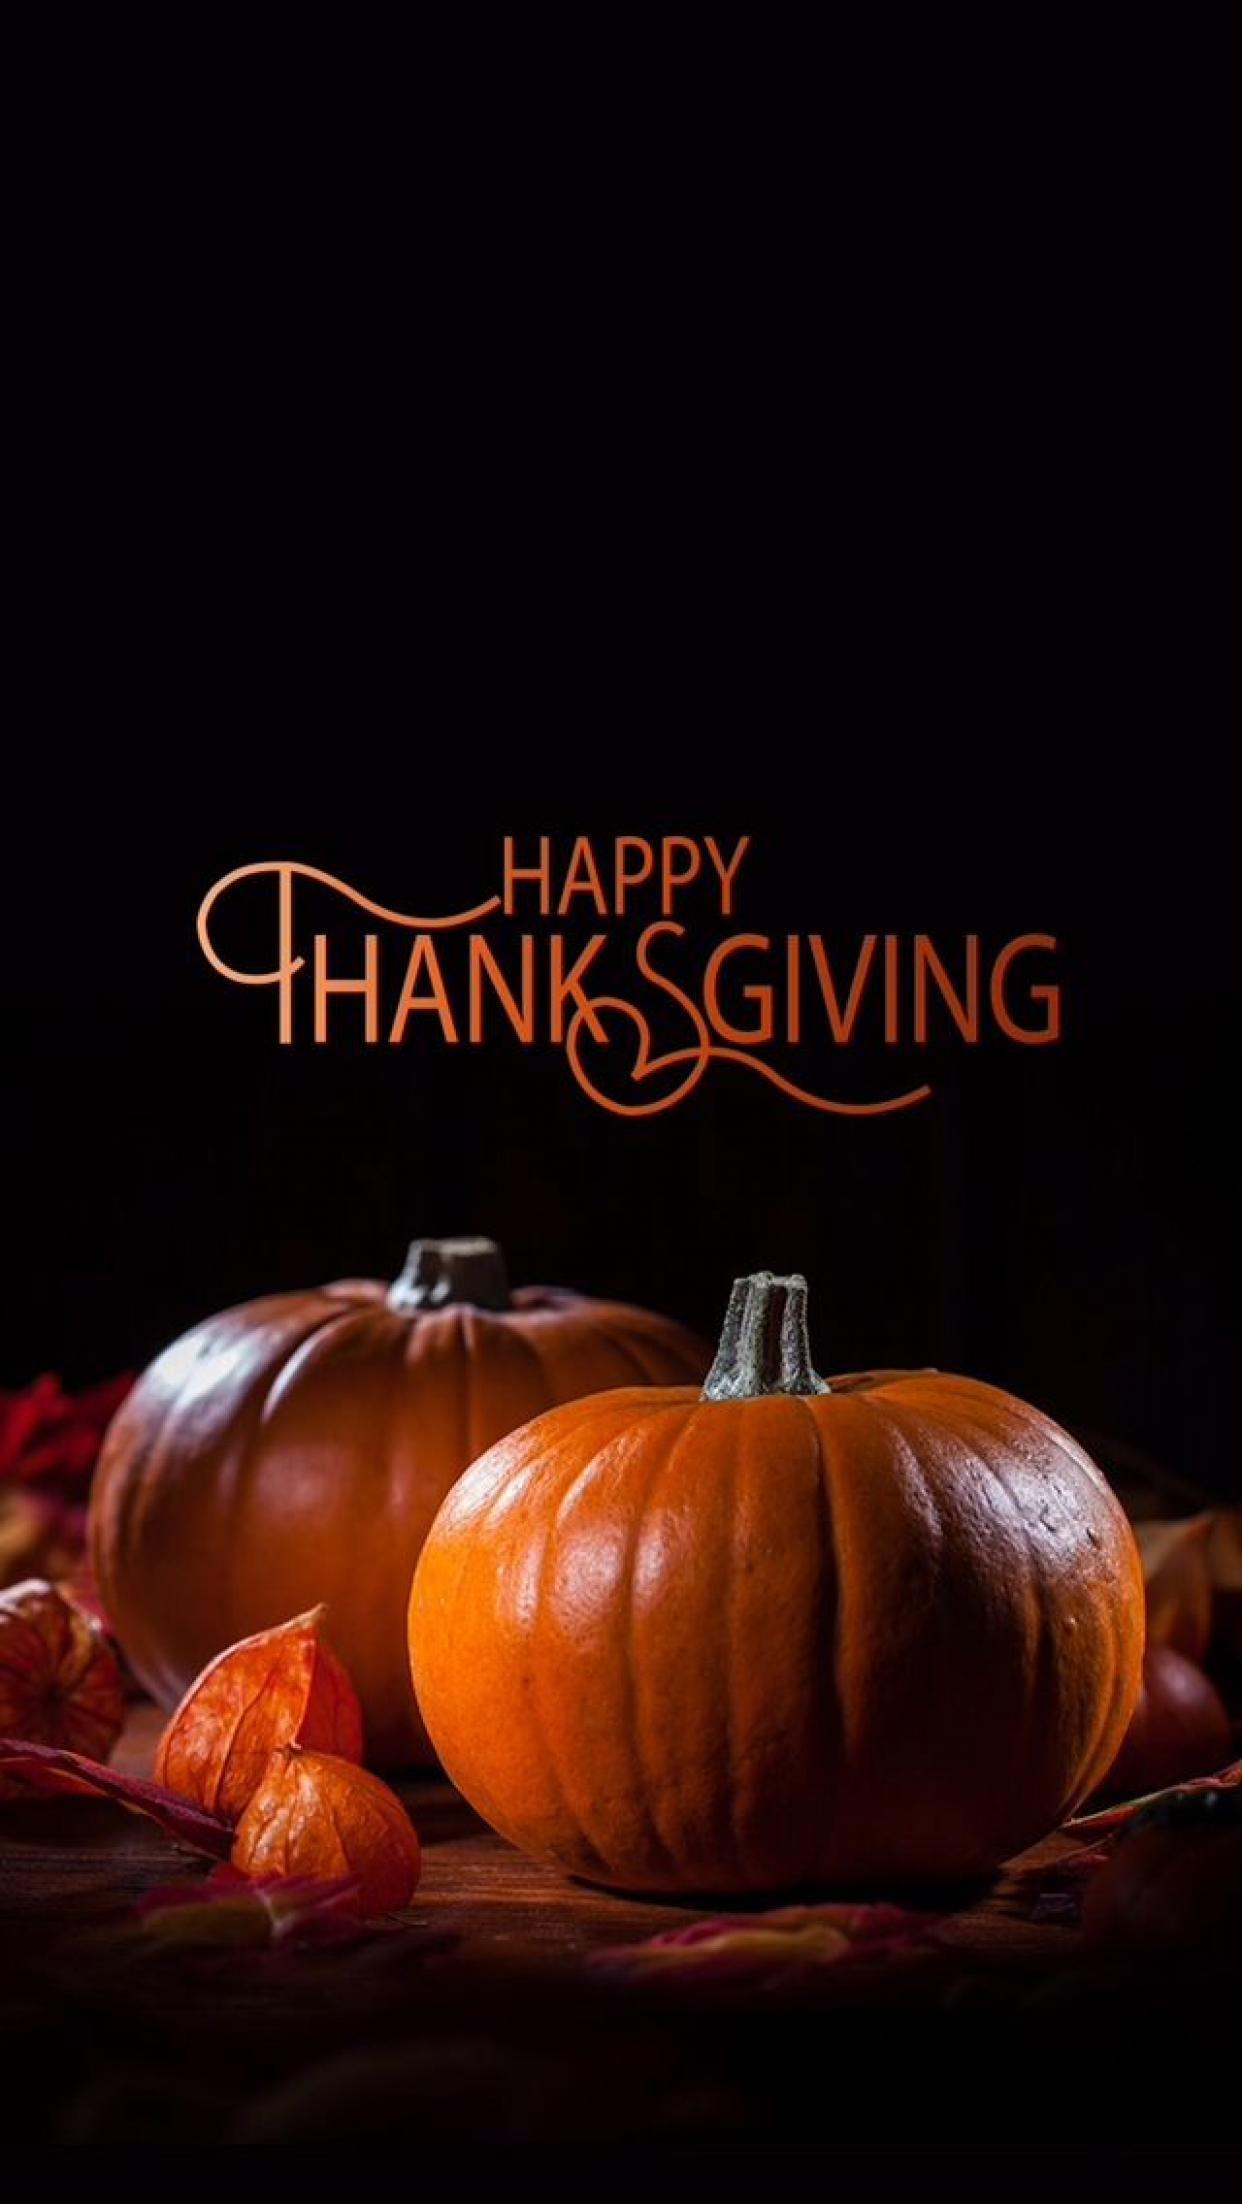 iphone 6 retina wallpaper. Happy thanksgiving wallpaper, Thanksgiving wallpaper, Thanksgiving background